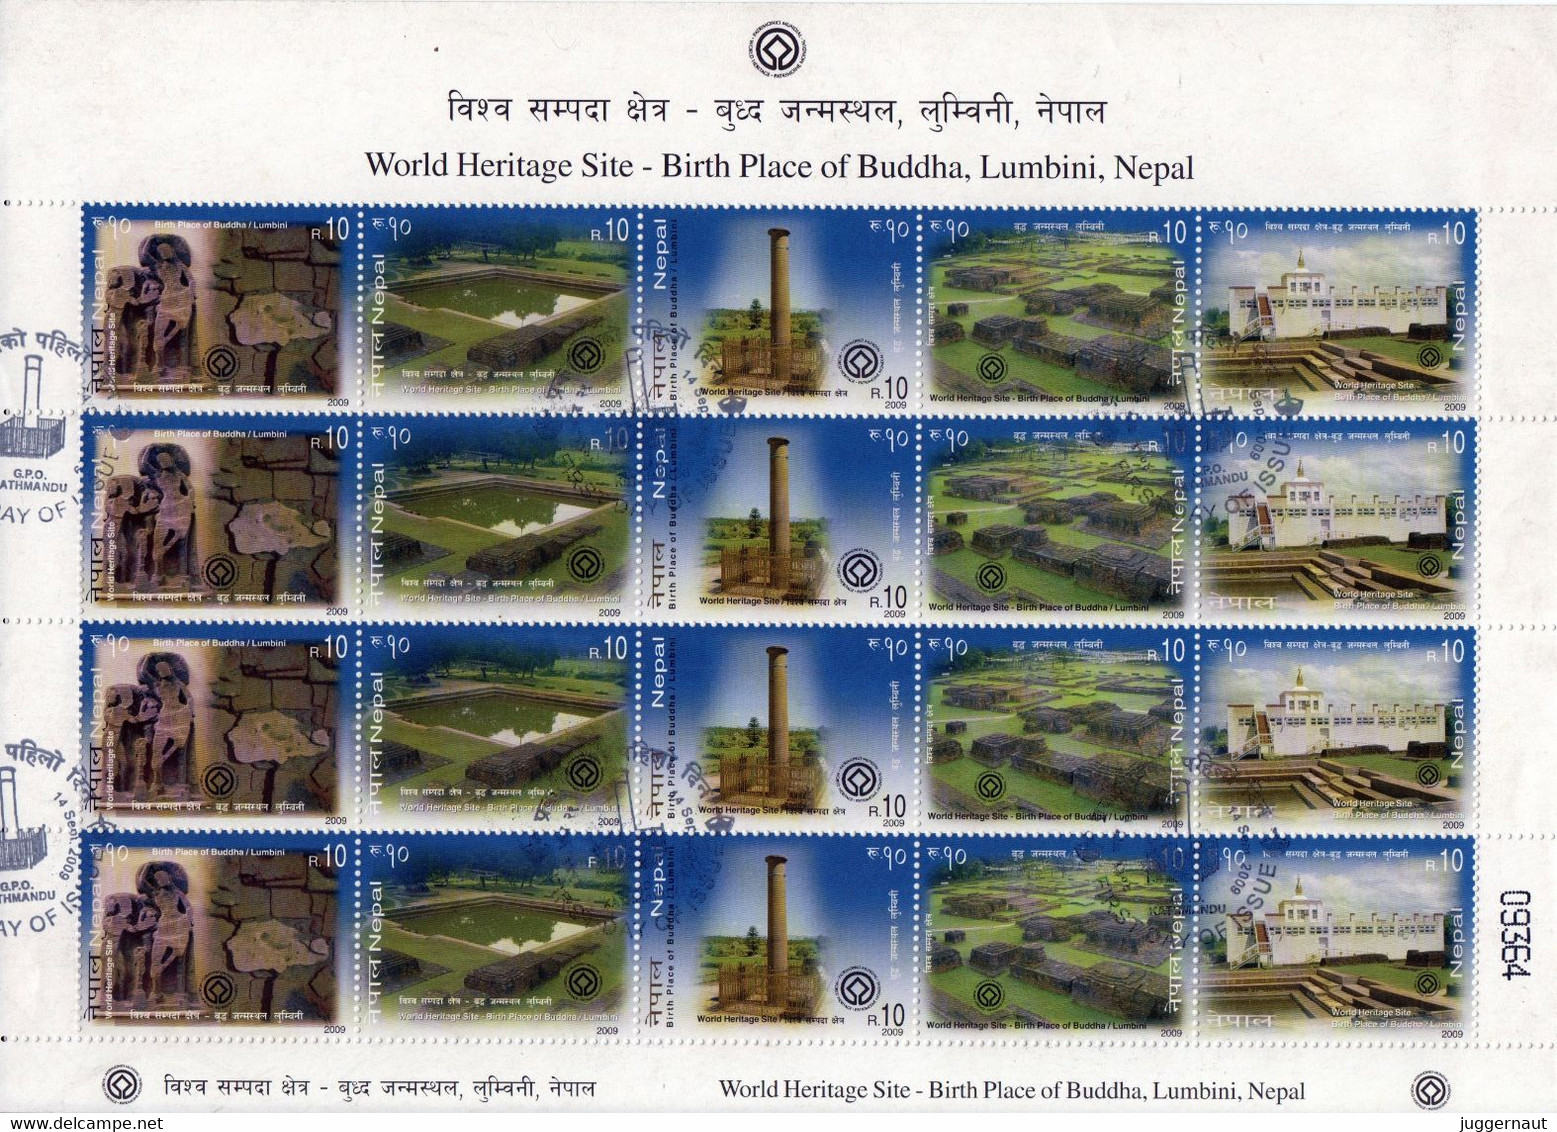 LUMBINI UNESCO Series STAMP Sheet FIRST DAY Cancel NEPAL 2009 USED/Good - Buddhism